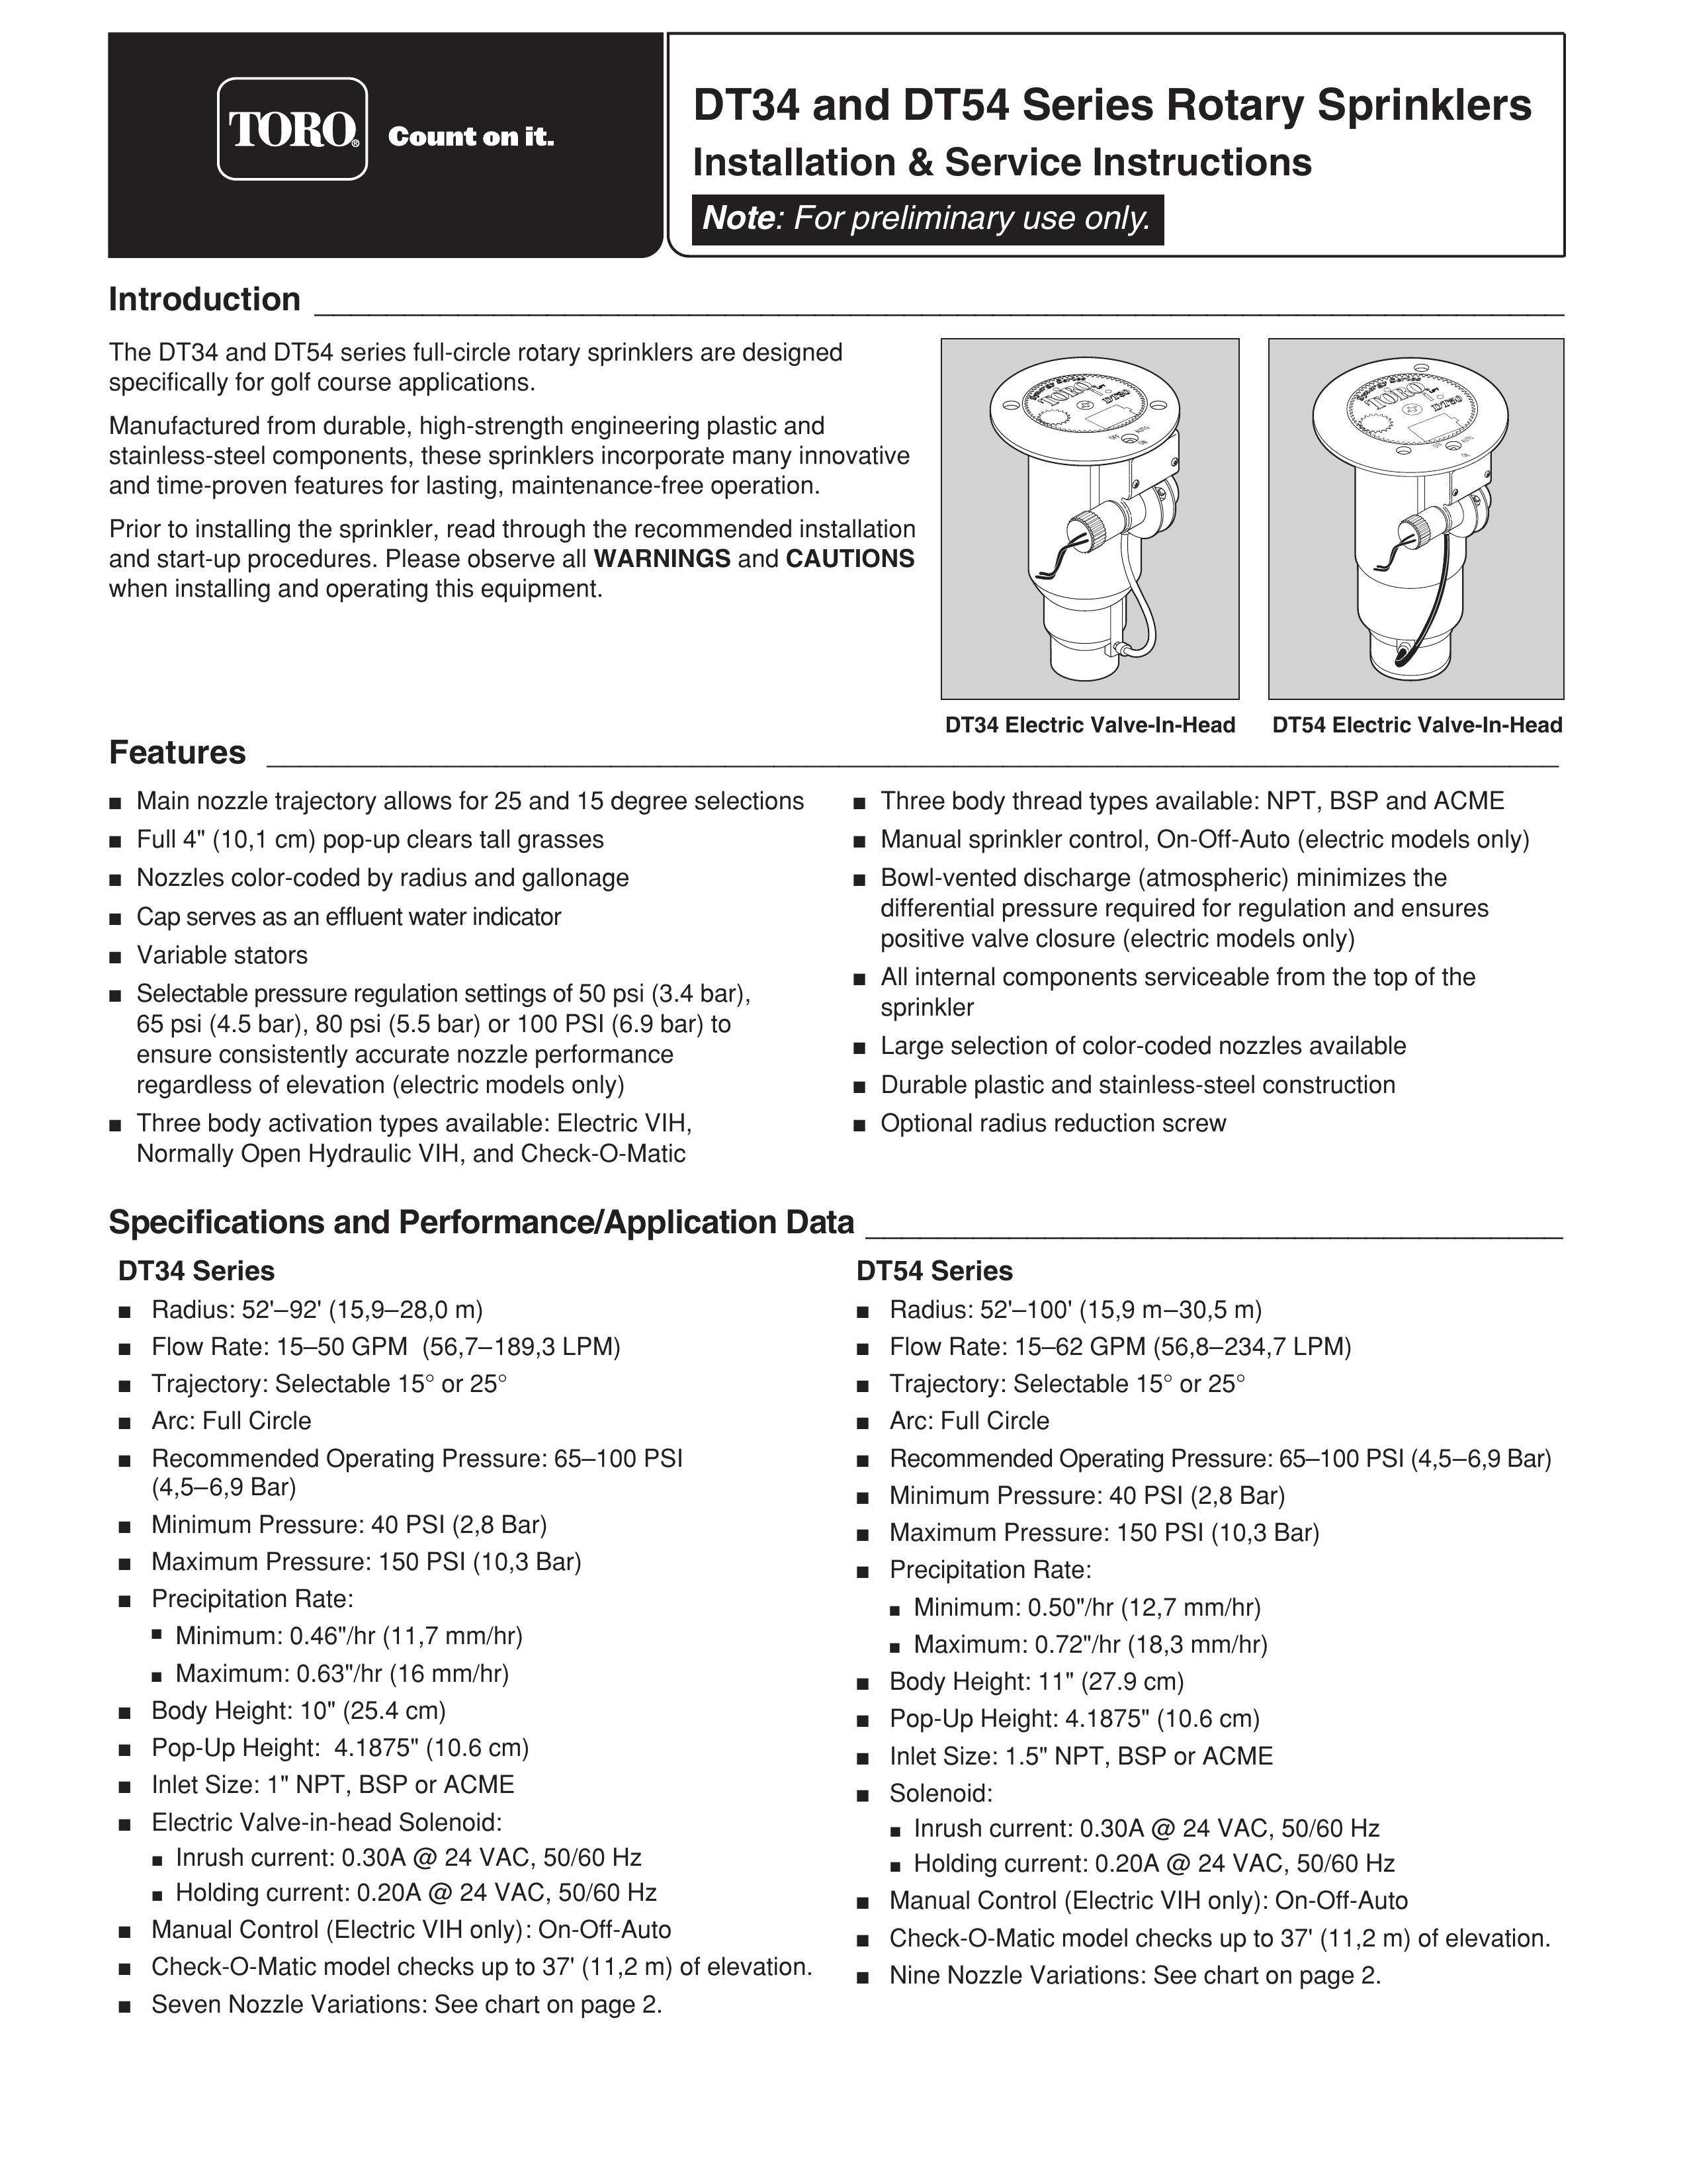 Toro DT34 Sprinkler User Manual